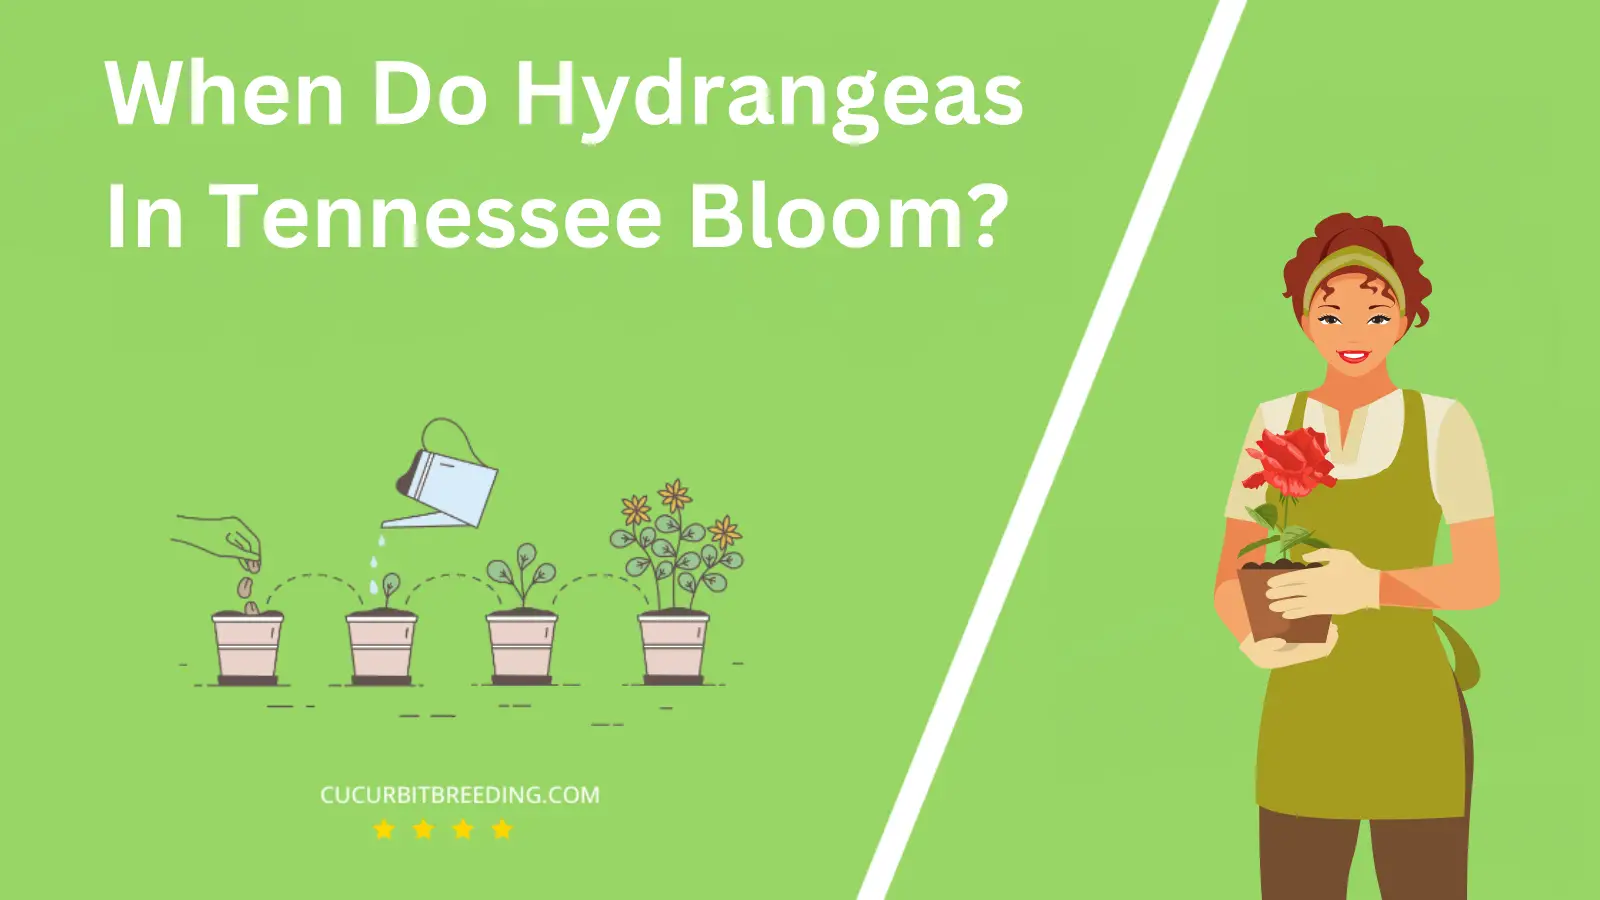 When Do Hydrangeas In Tennessee Bloom?